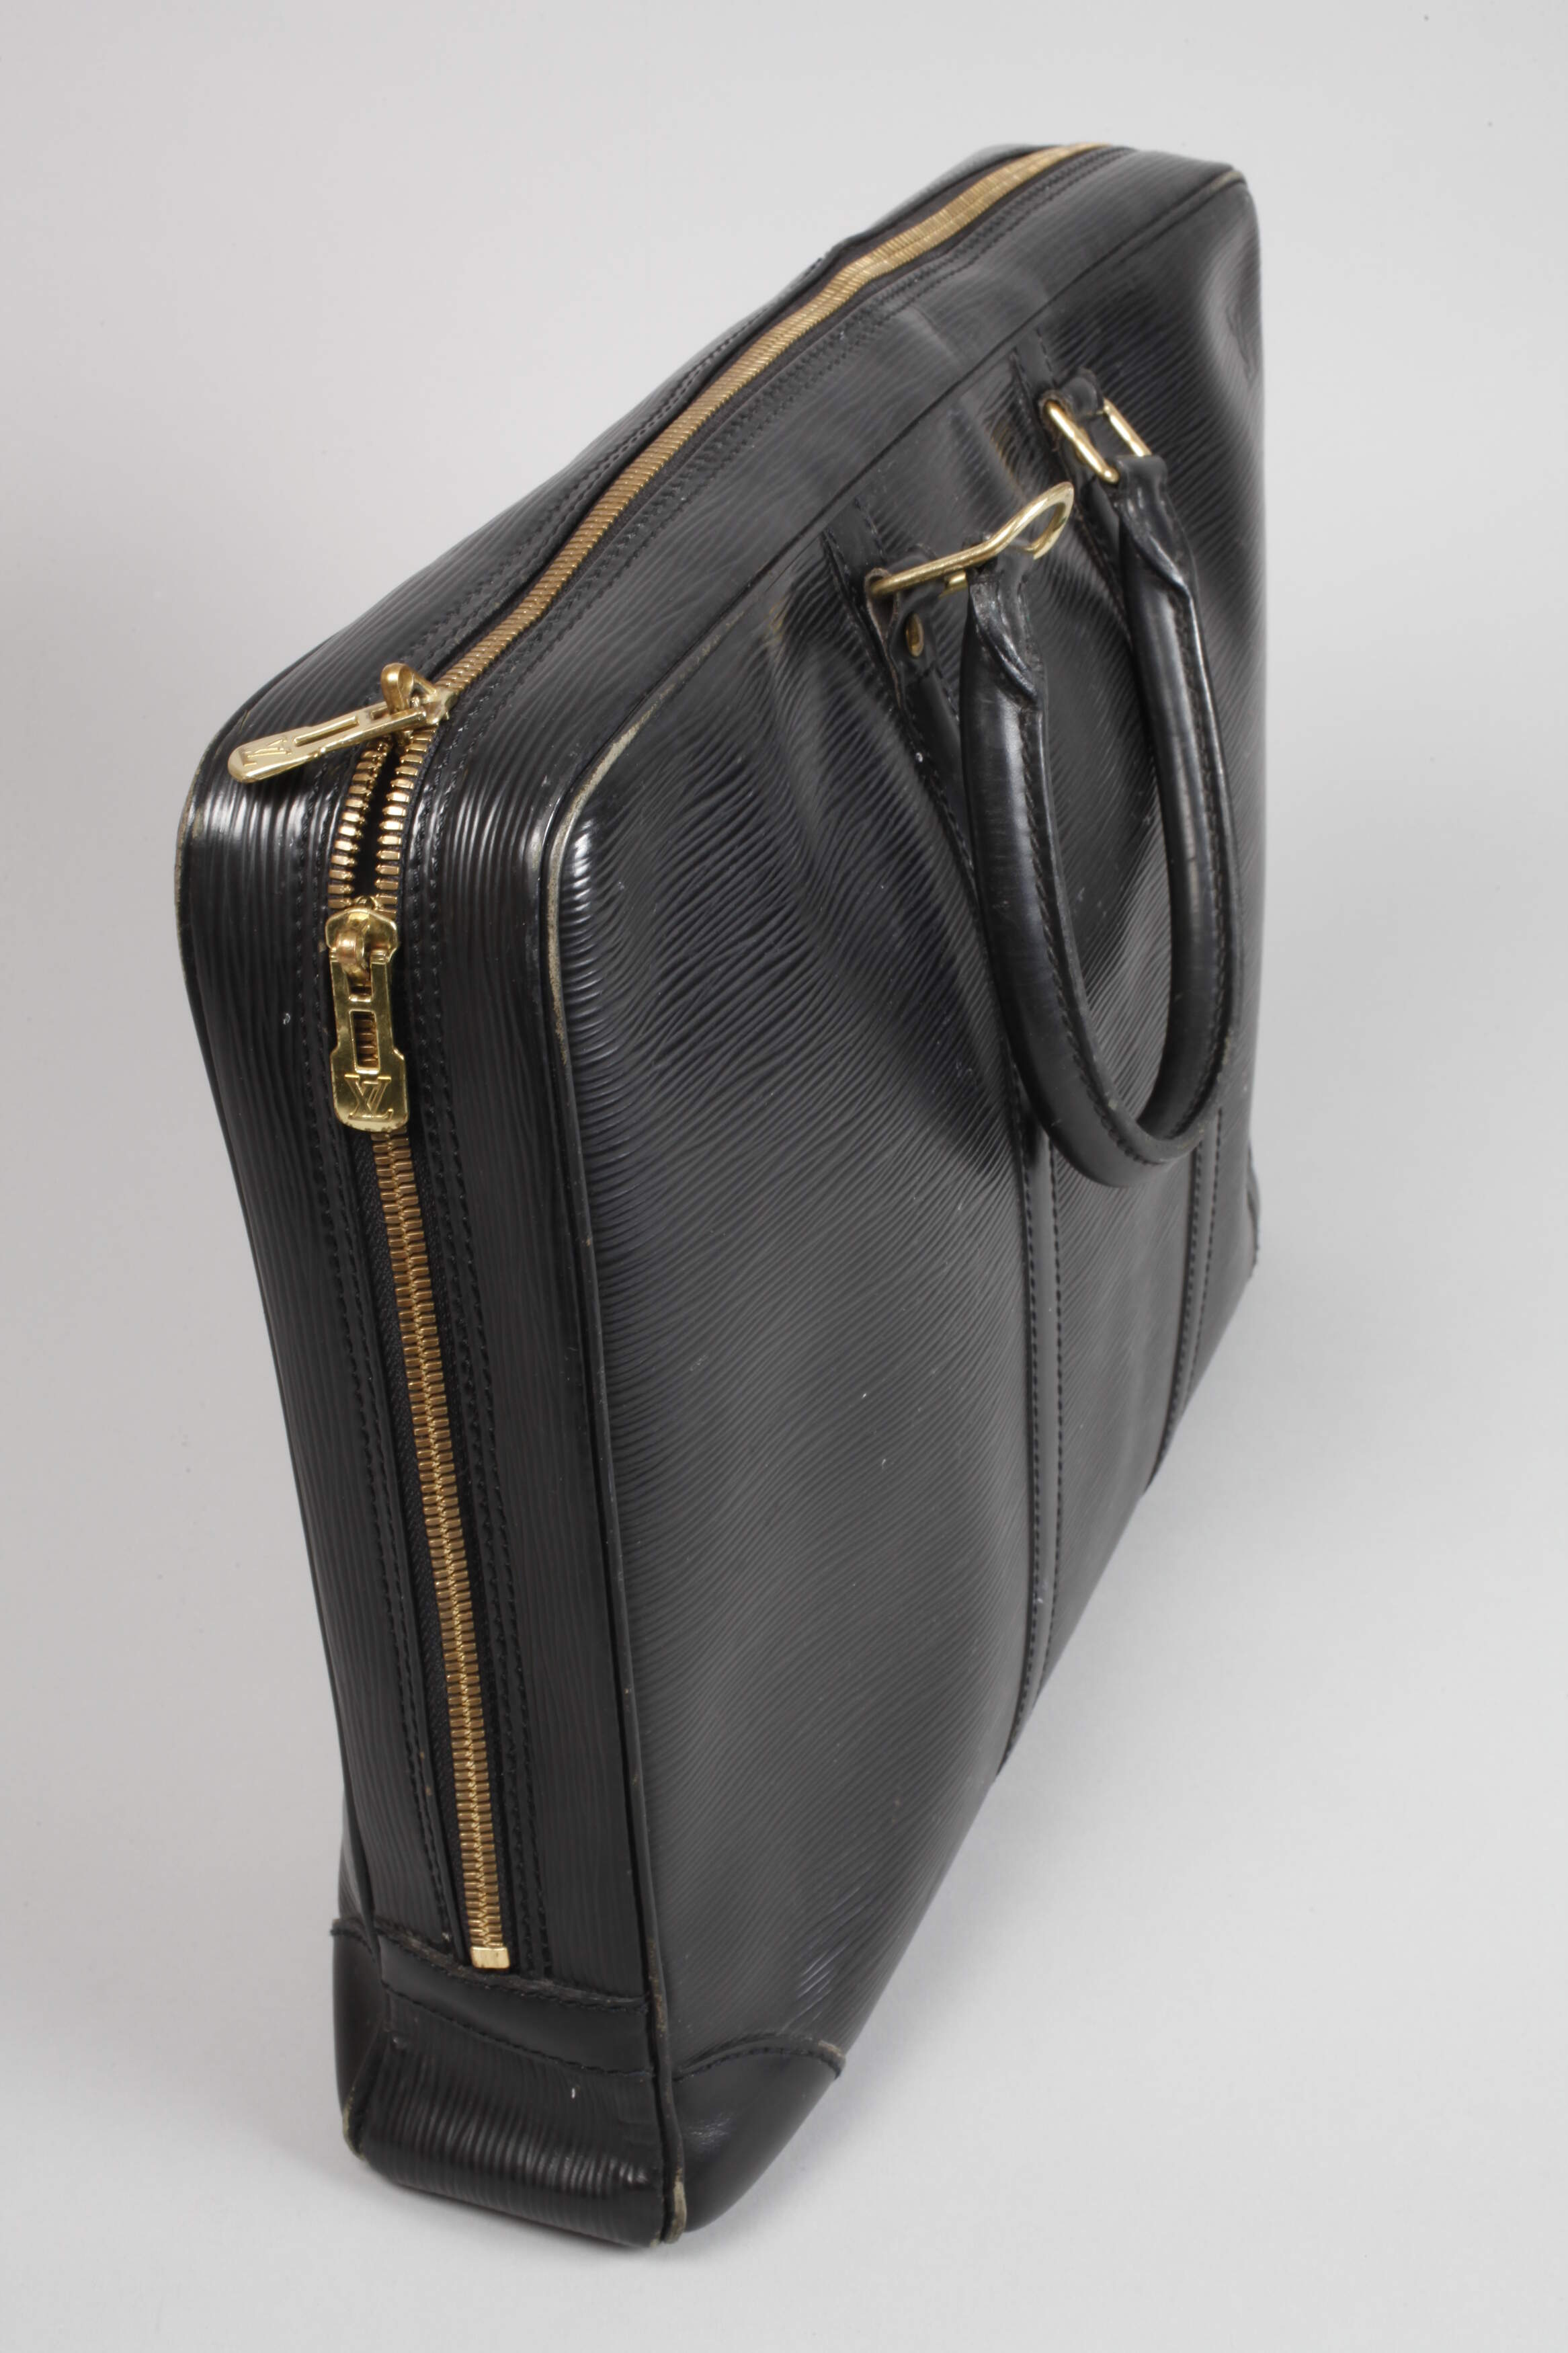 Louis Vuitton briefcase - Image 4 of 7